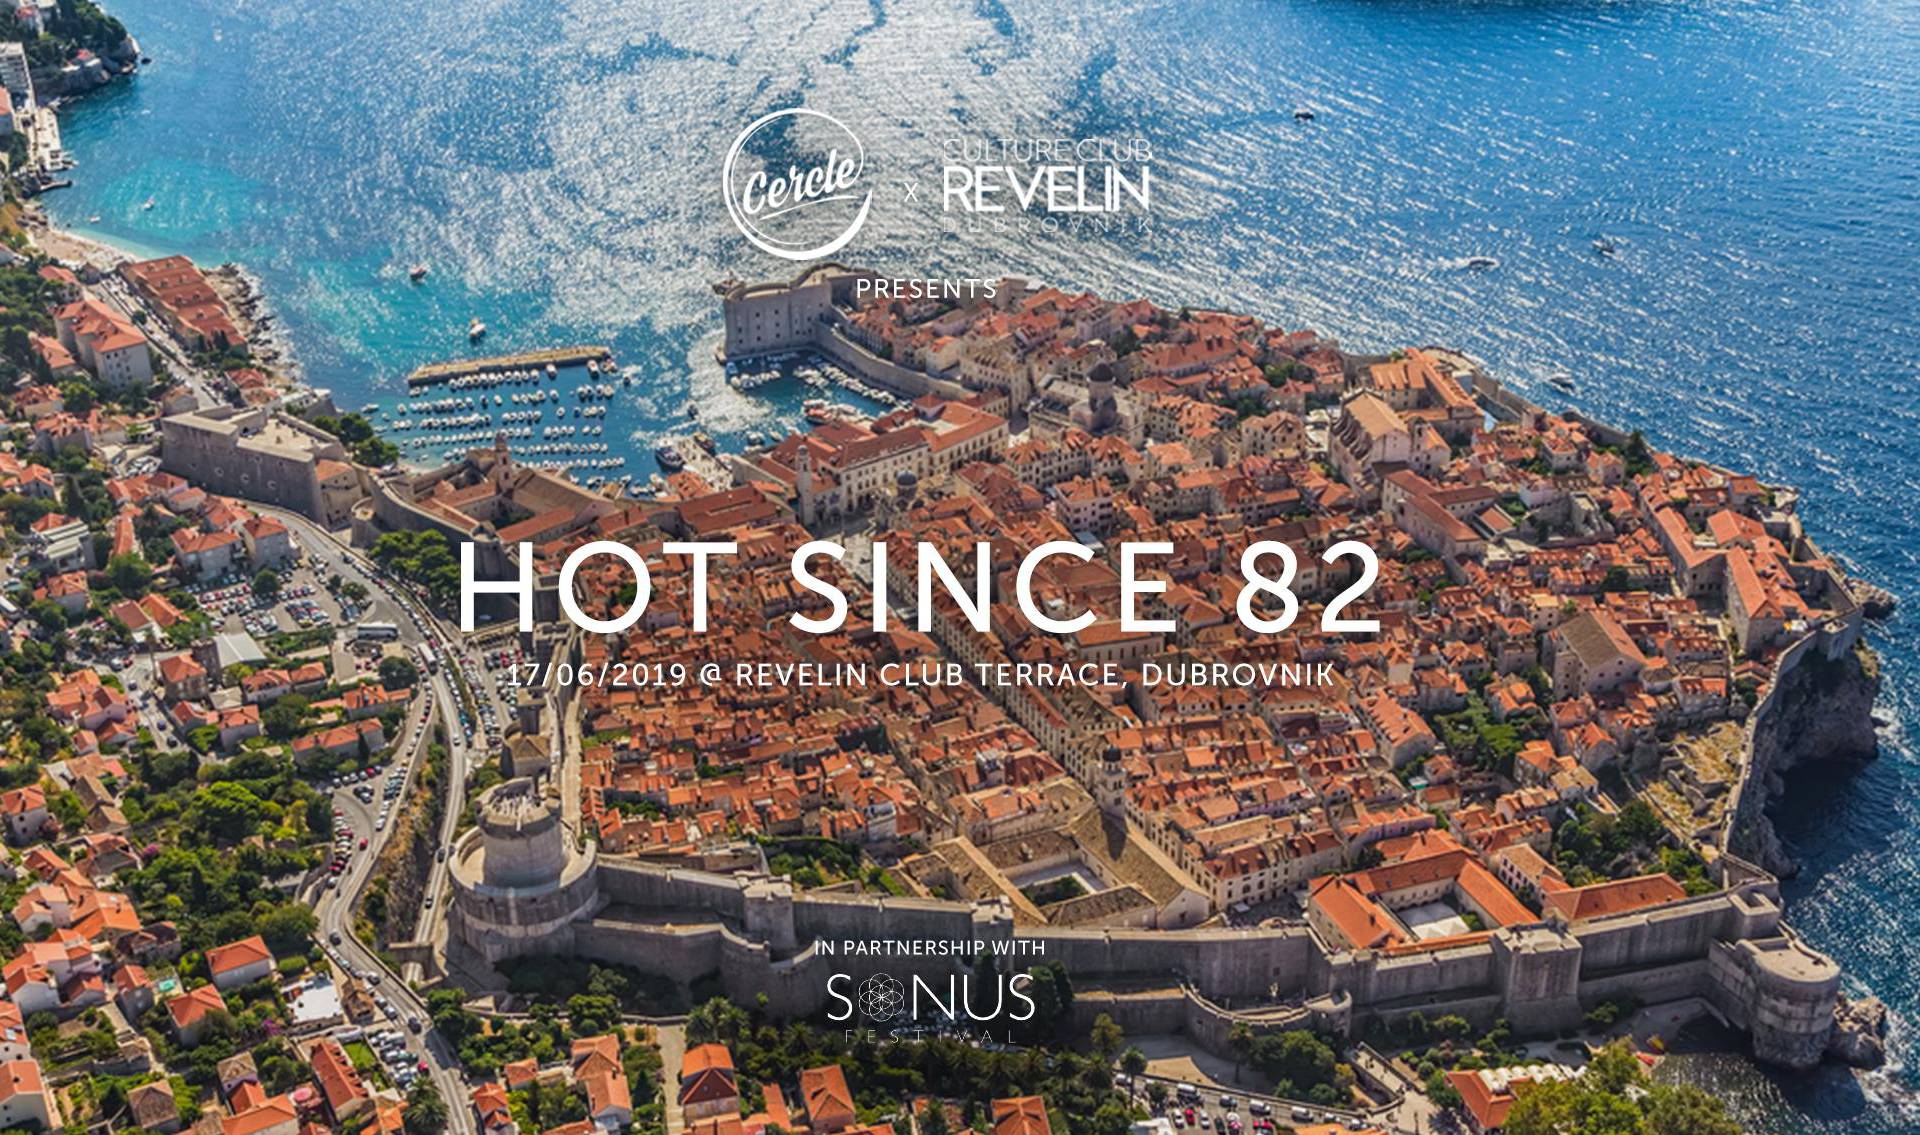 Koncert na terasi Culture kluba Revelin: Cercle poziva Hot Since 82